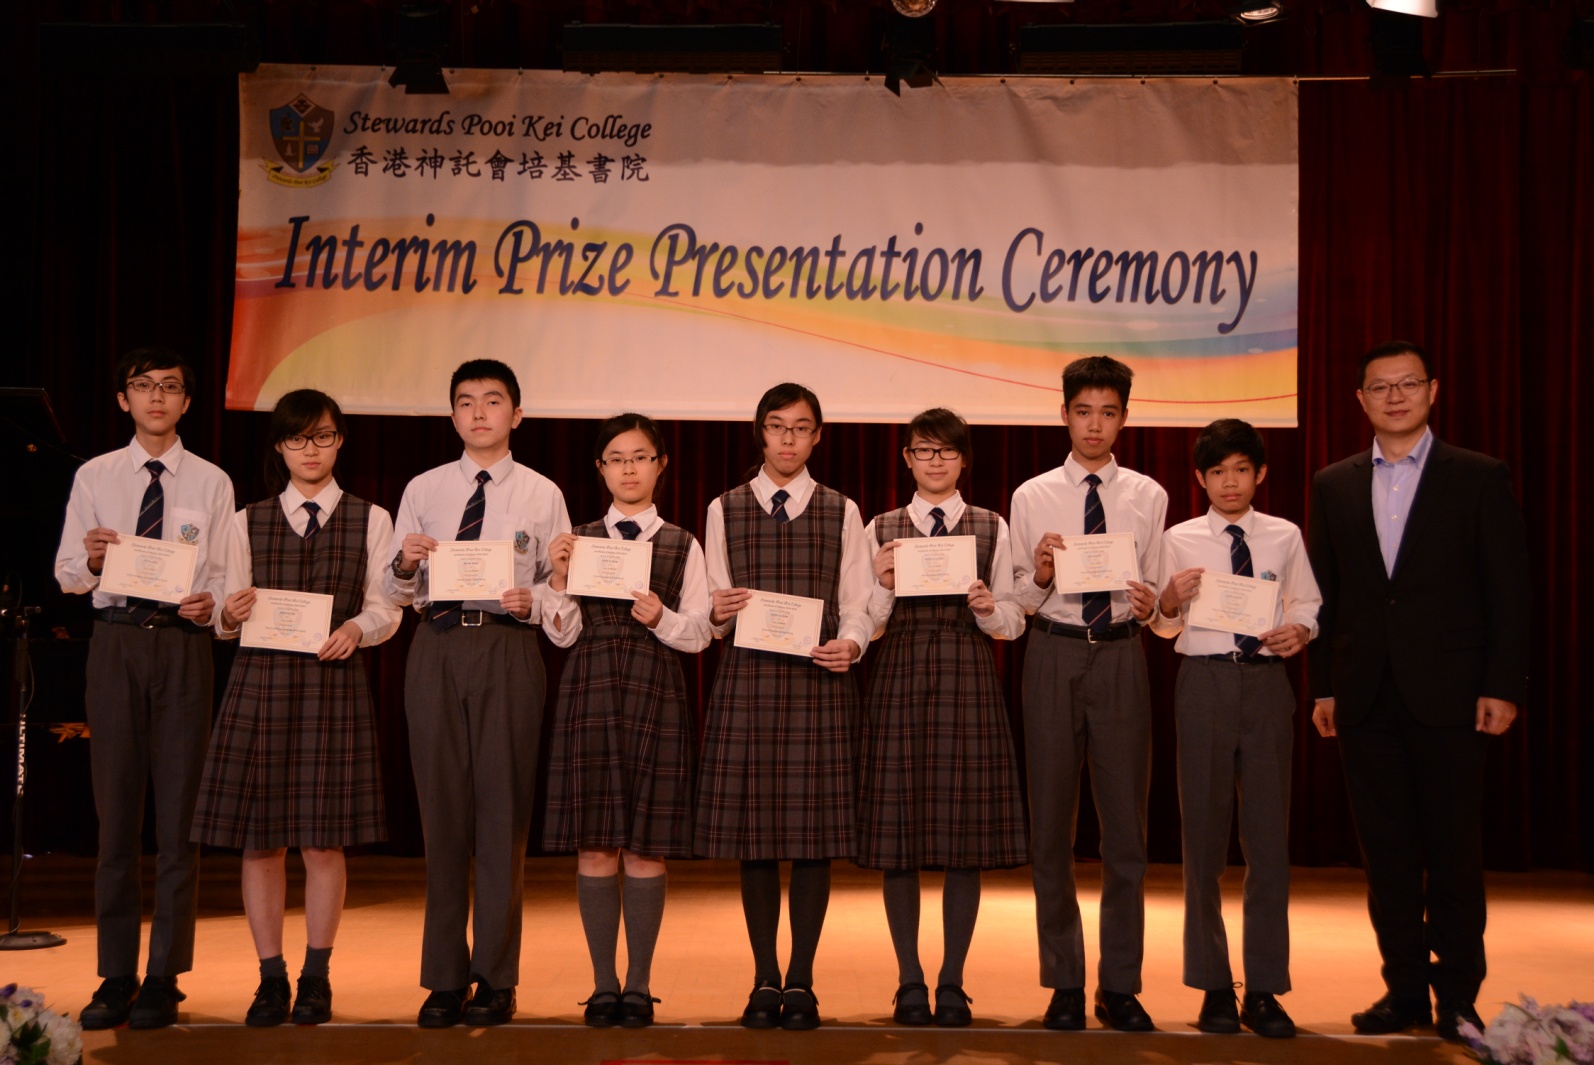 The Interim Prize Presentation Ceremony 2014-15